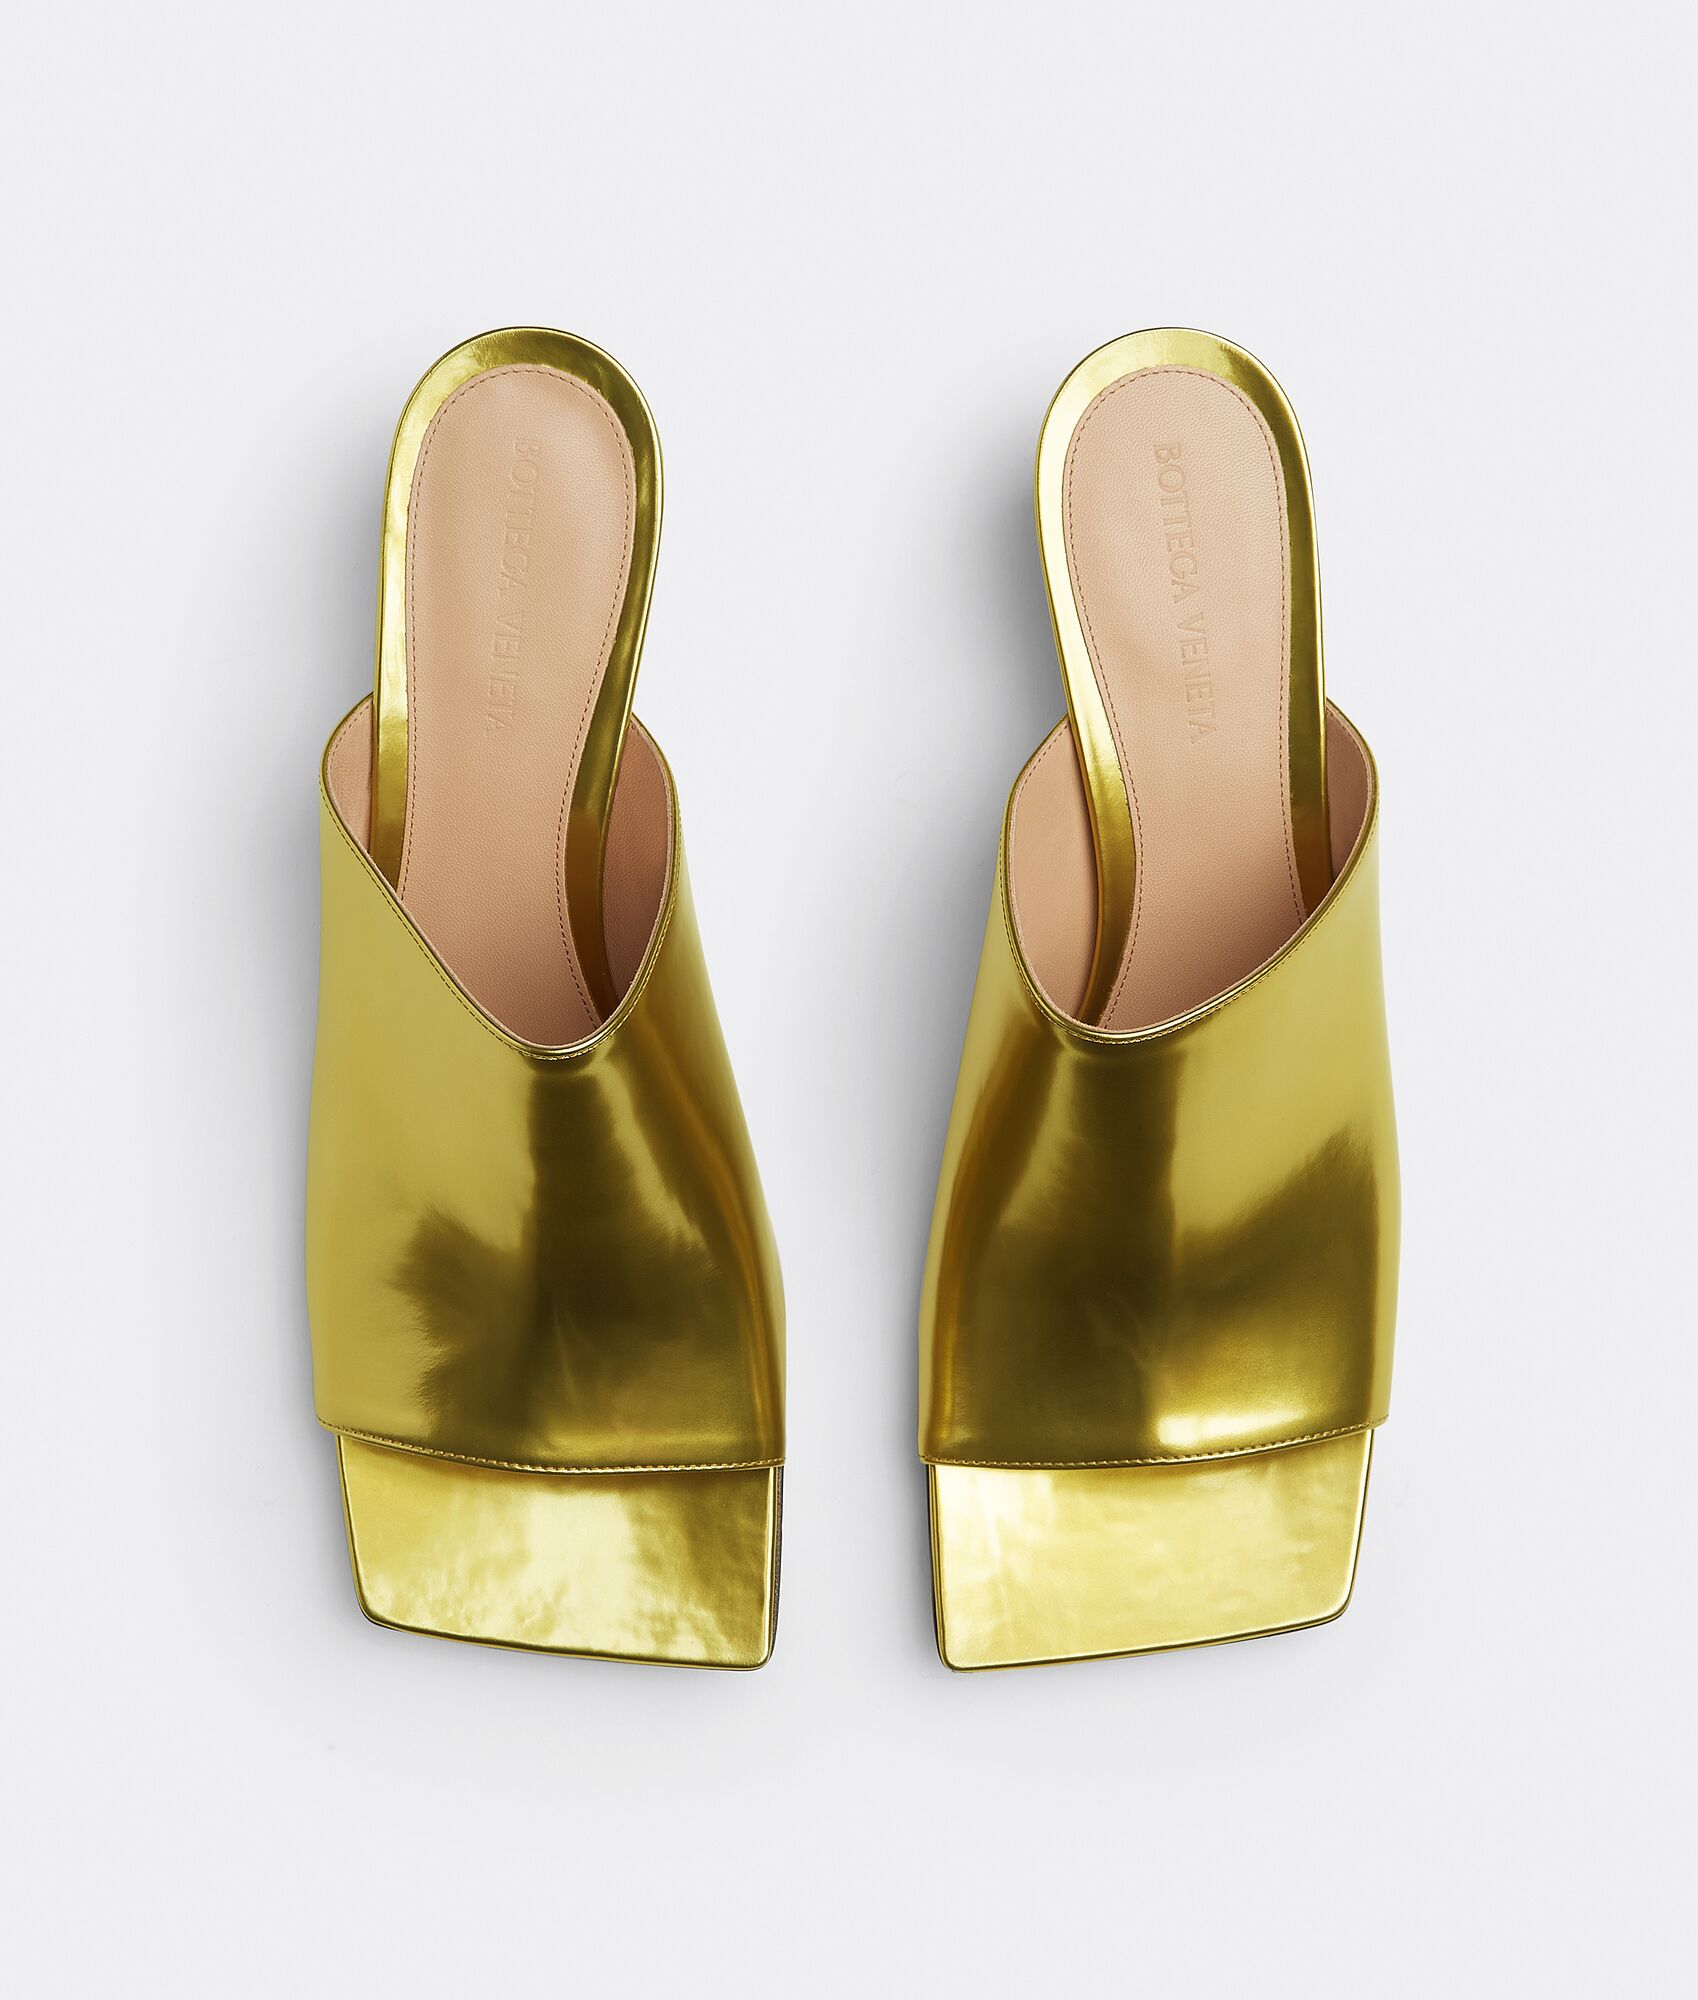 Bottega Veneta® Women's Stretch Mule in Gold. Shop online now.